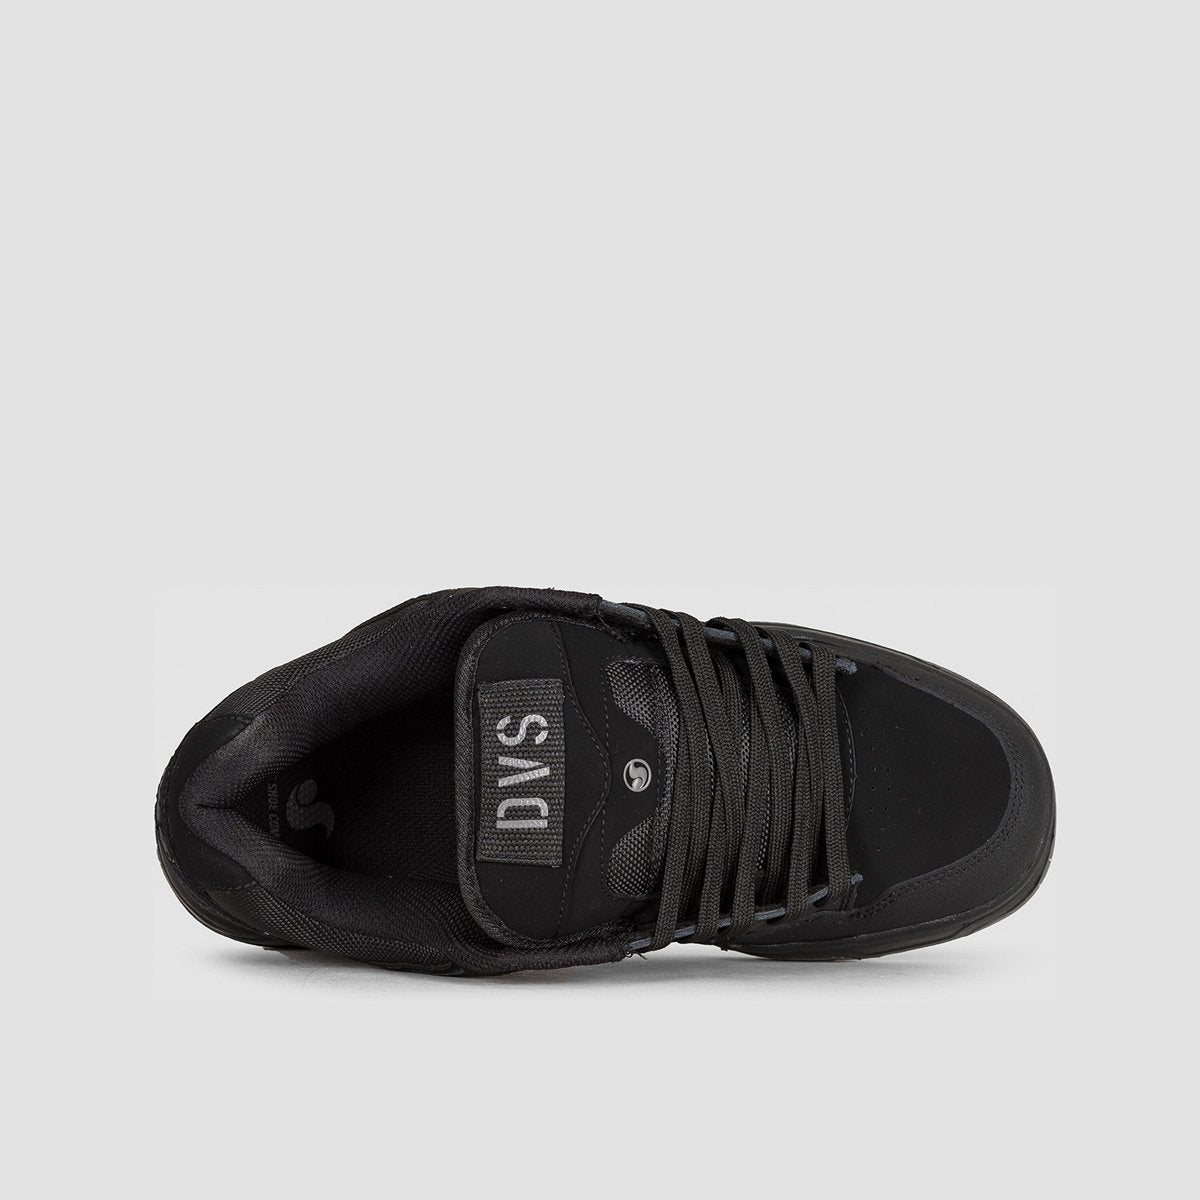 DVS Enduro Heir Black/Black Leather - Footwear